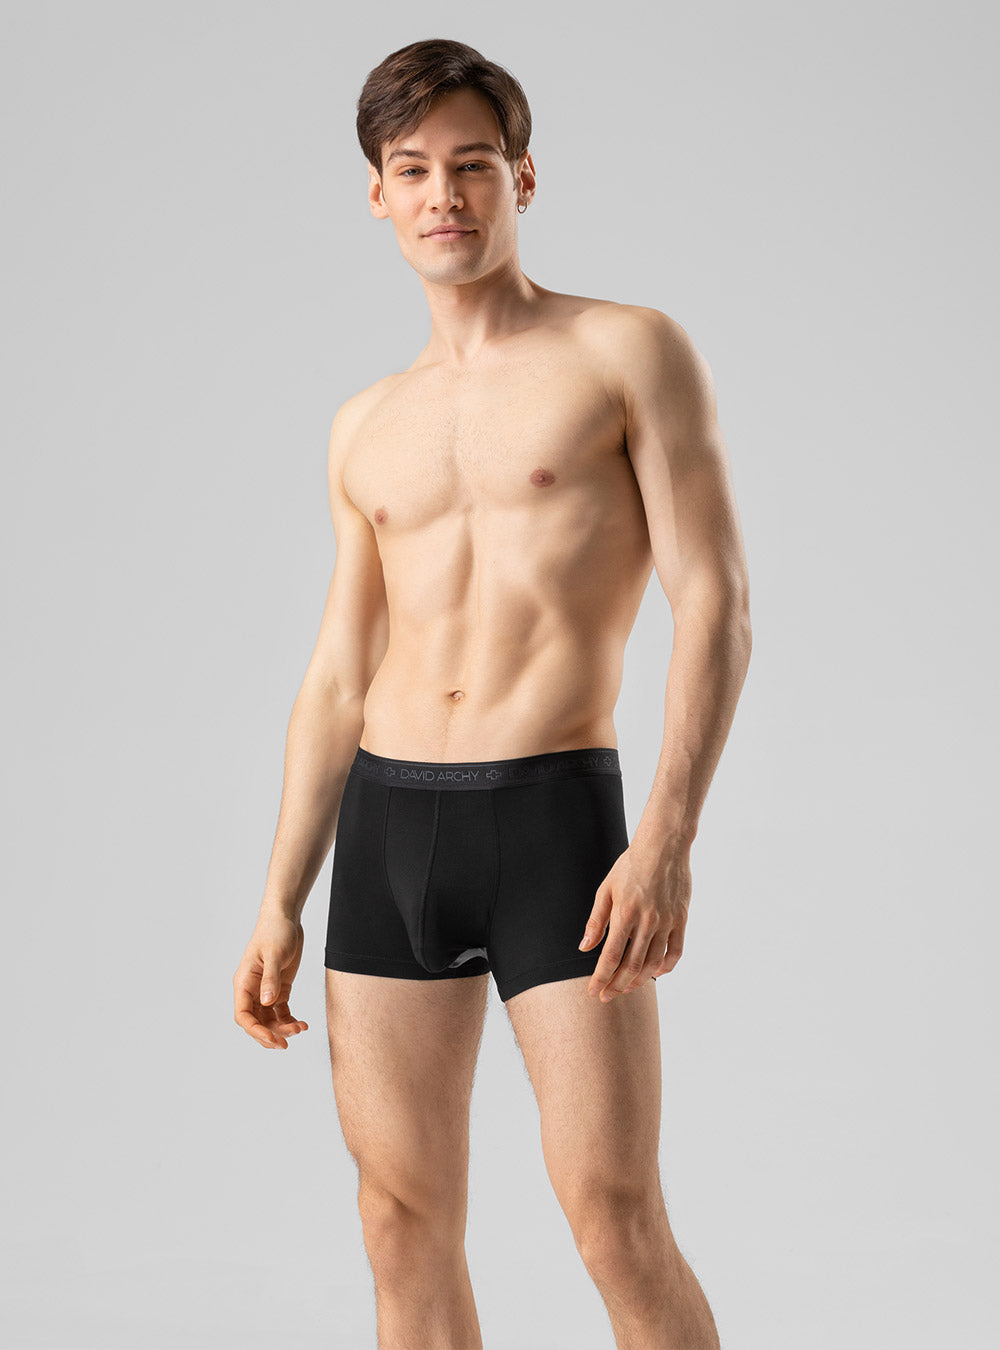 DAVID ARCHY Men's Underwear Micro Modal Dual Pouch Trunks Support Ball Pouch  Bulge Enhancing Boxer Briefs